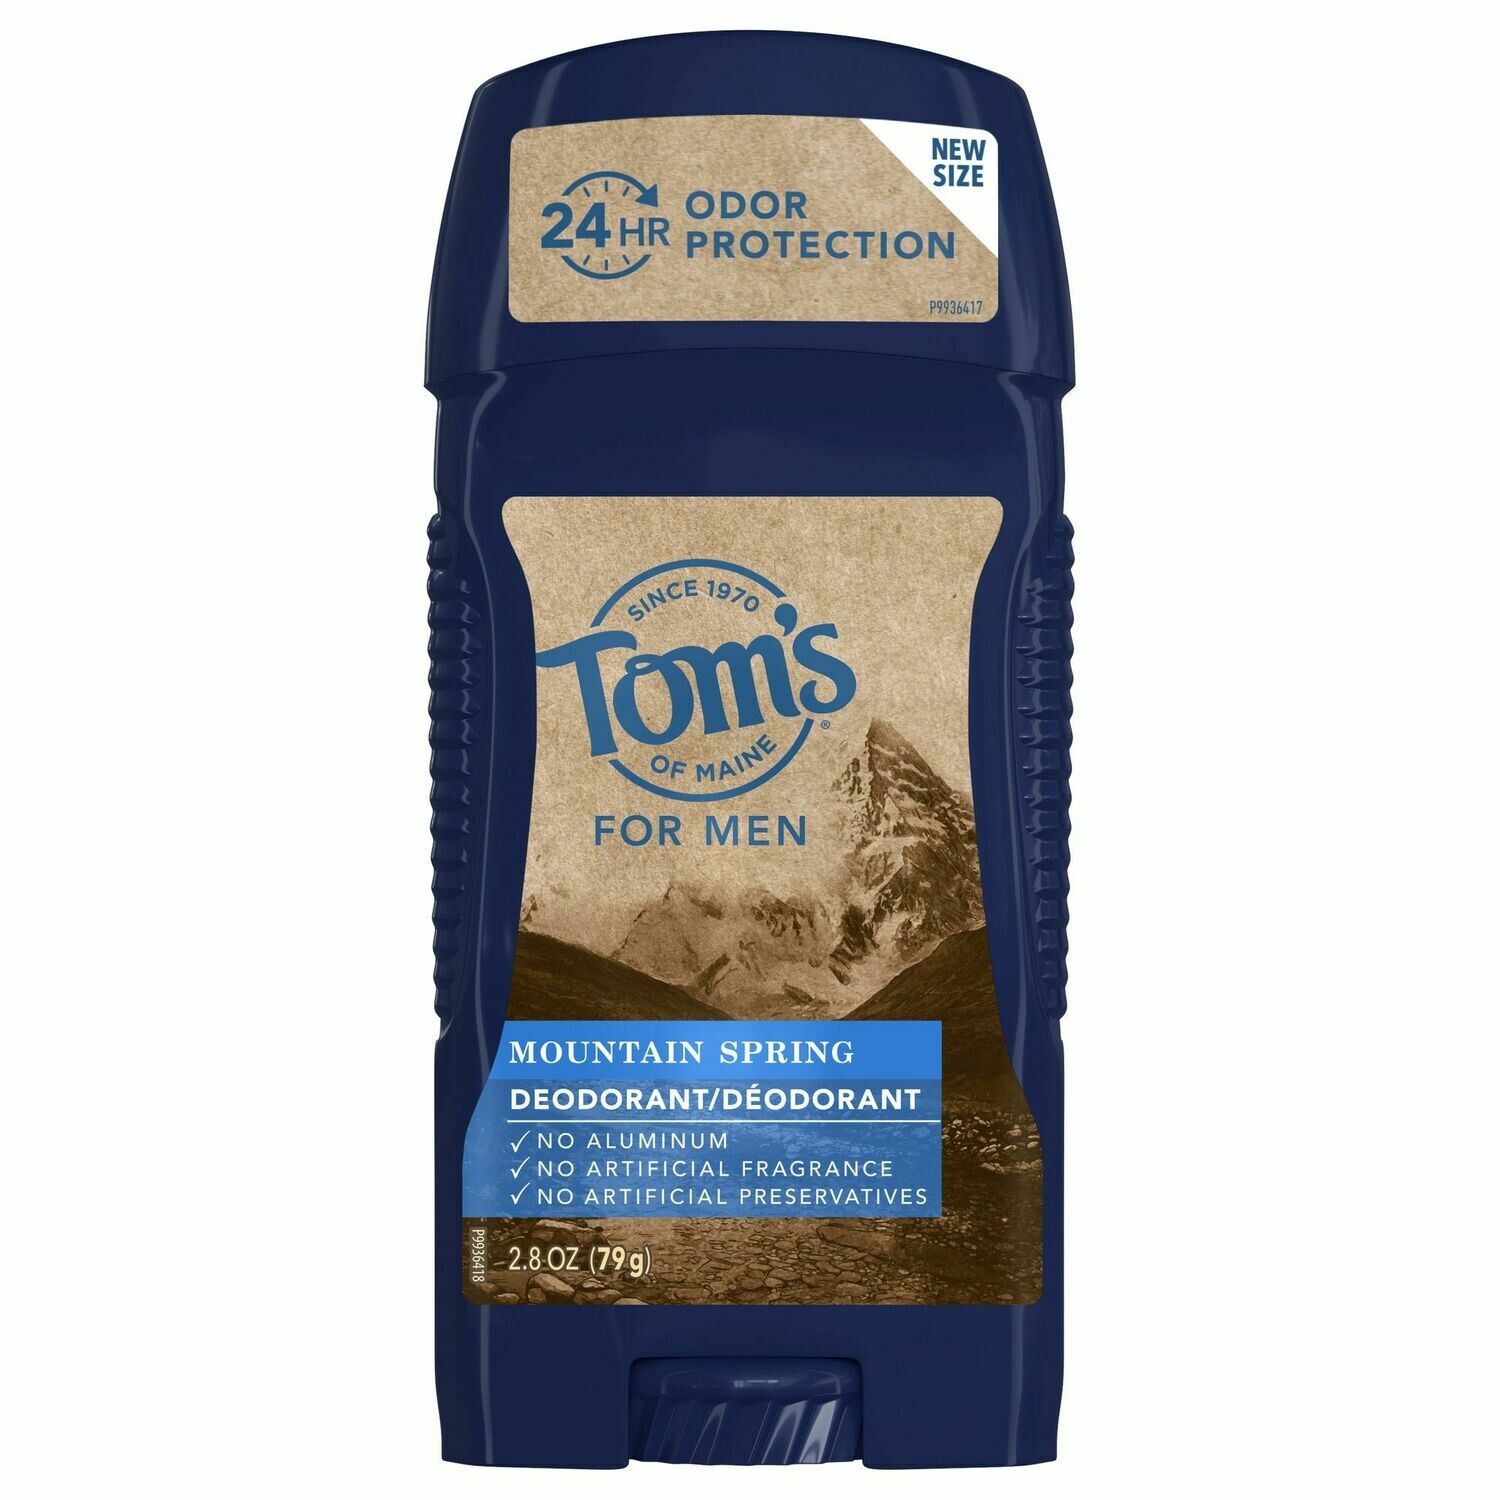 Tom's of Maine Mountain Spring deodorant 2.8oz